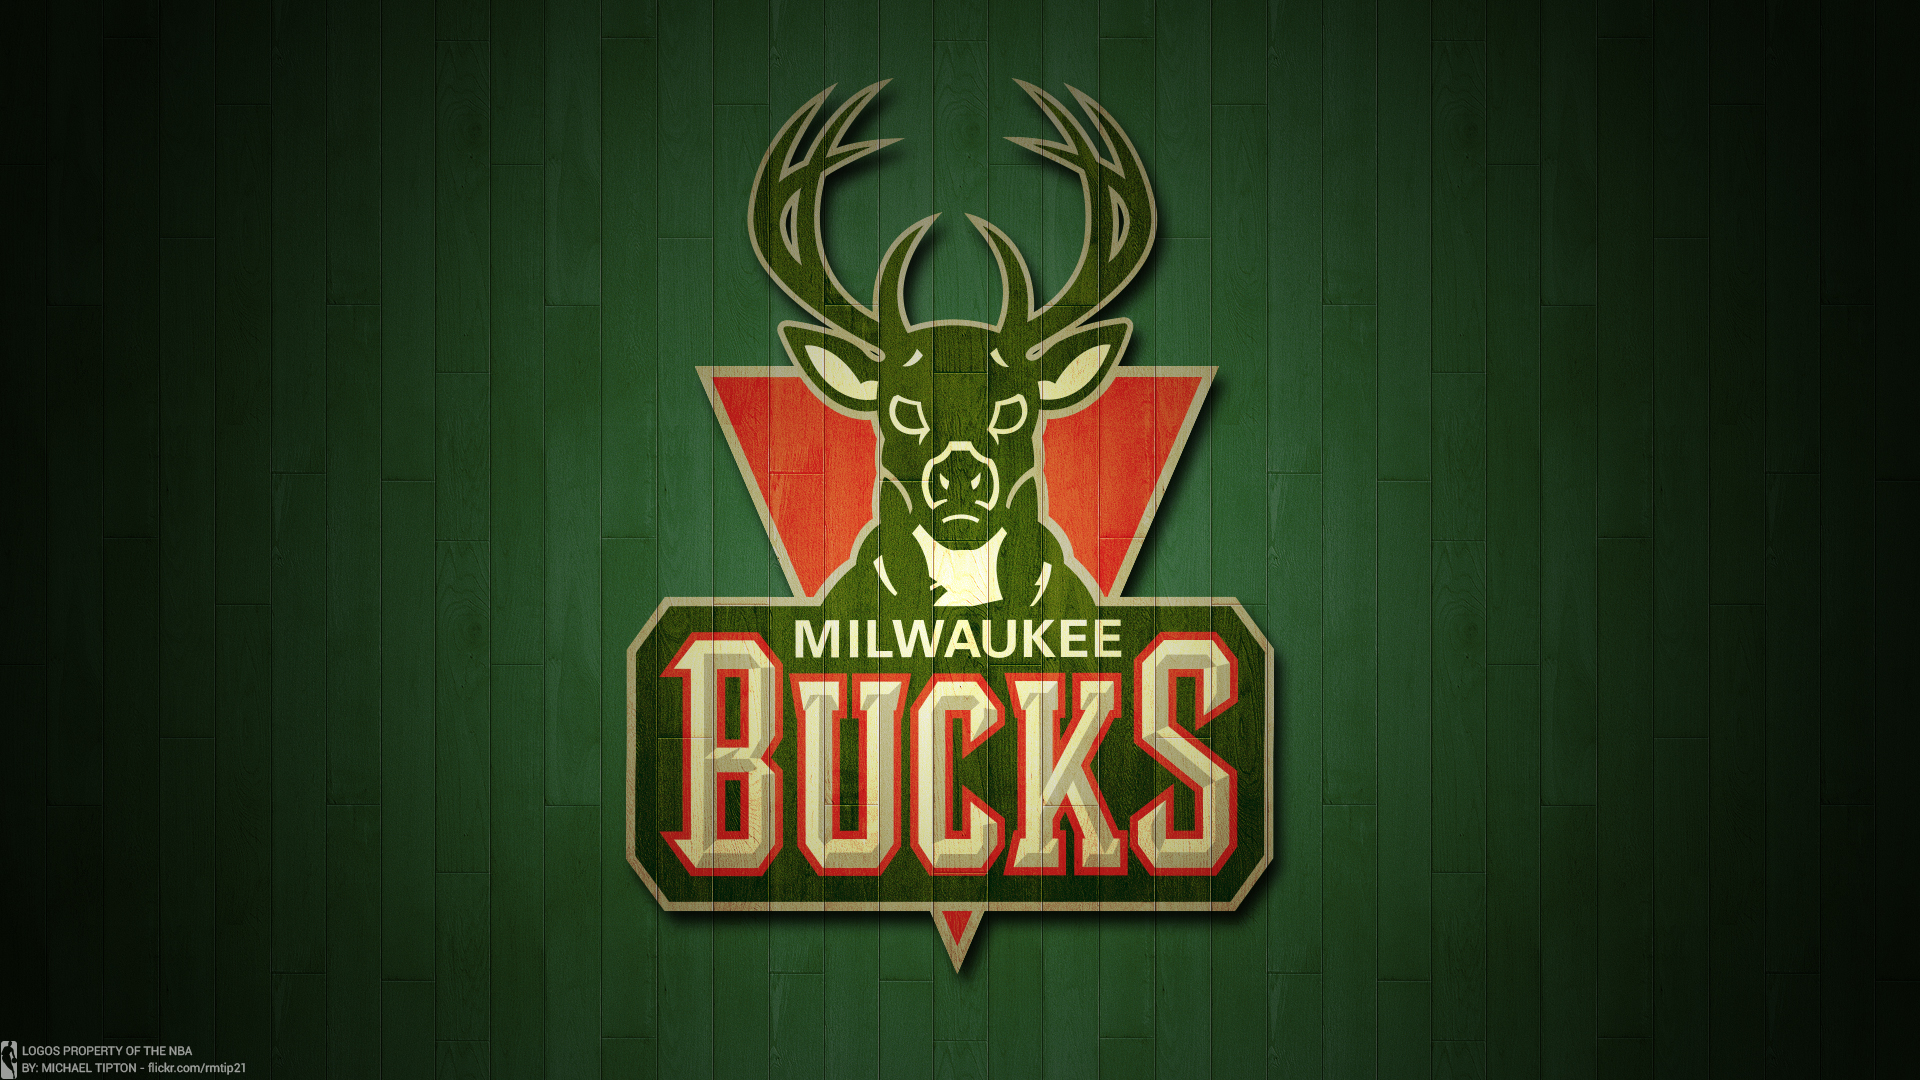 Milwaukee Bucks Basketball Team by Michael Tipton